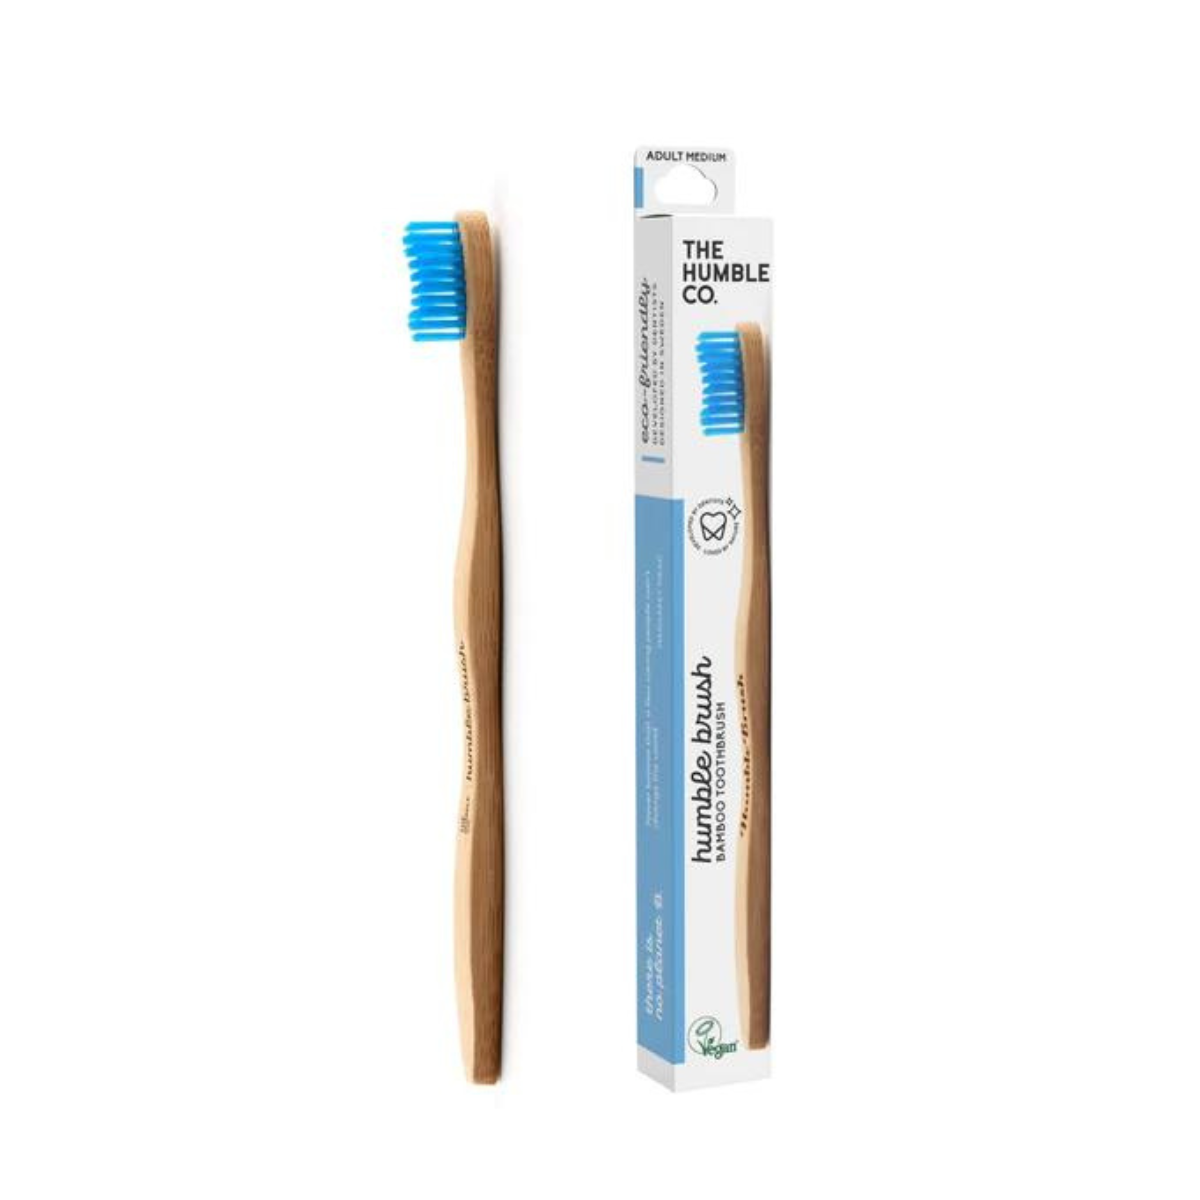 Brosse a dent bambou - Bleu - Medium - THE HUMBLE CO